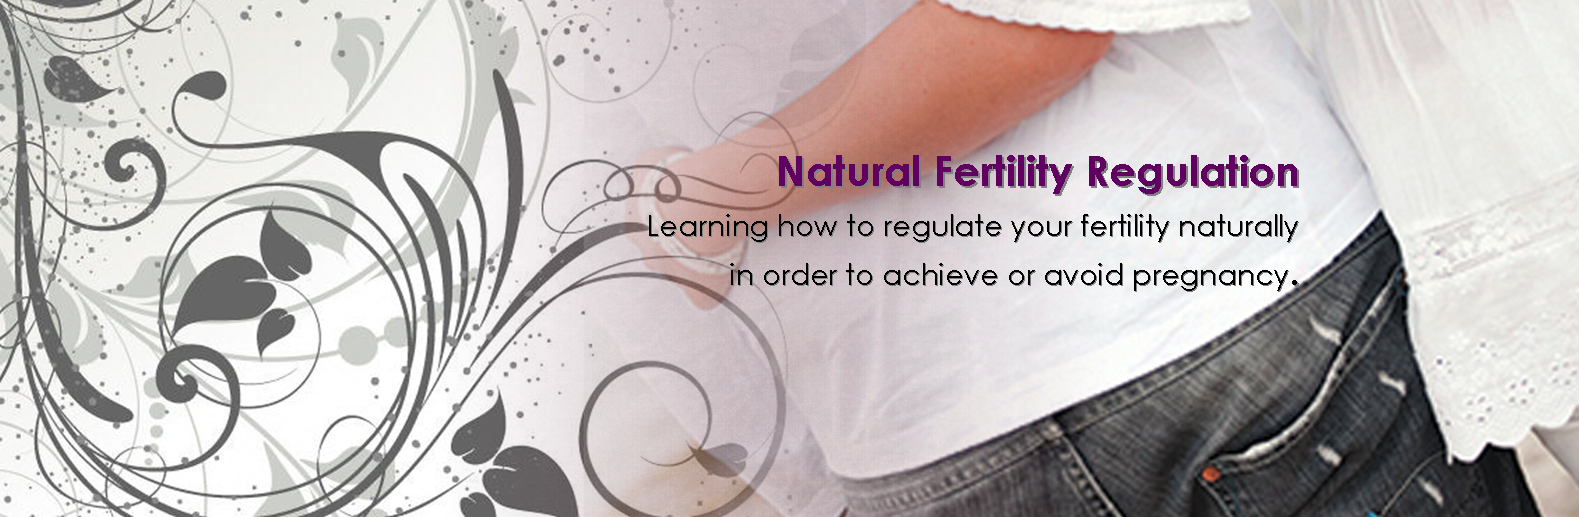 natural-fertility-regulation-banner2